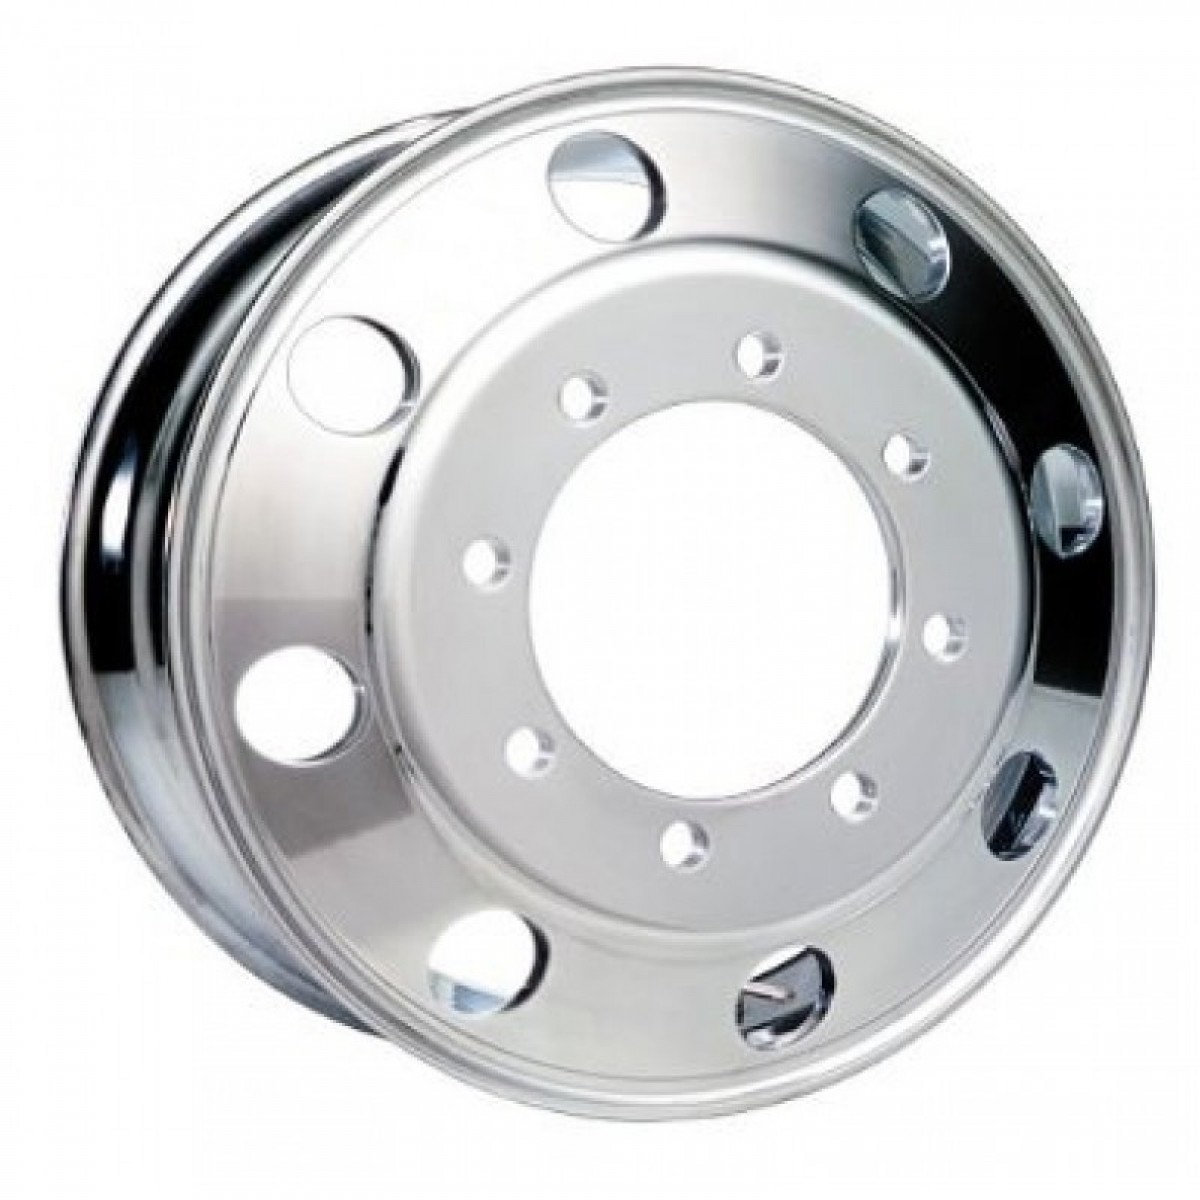 Aluminum Wheel Rim 24.5 X 8.25 10 Hole Lug Hub-Pilot for Tractor Truck & Trailer